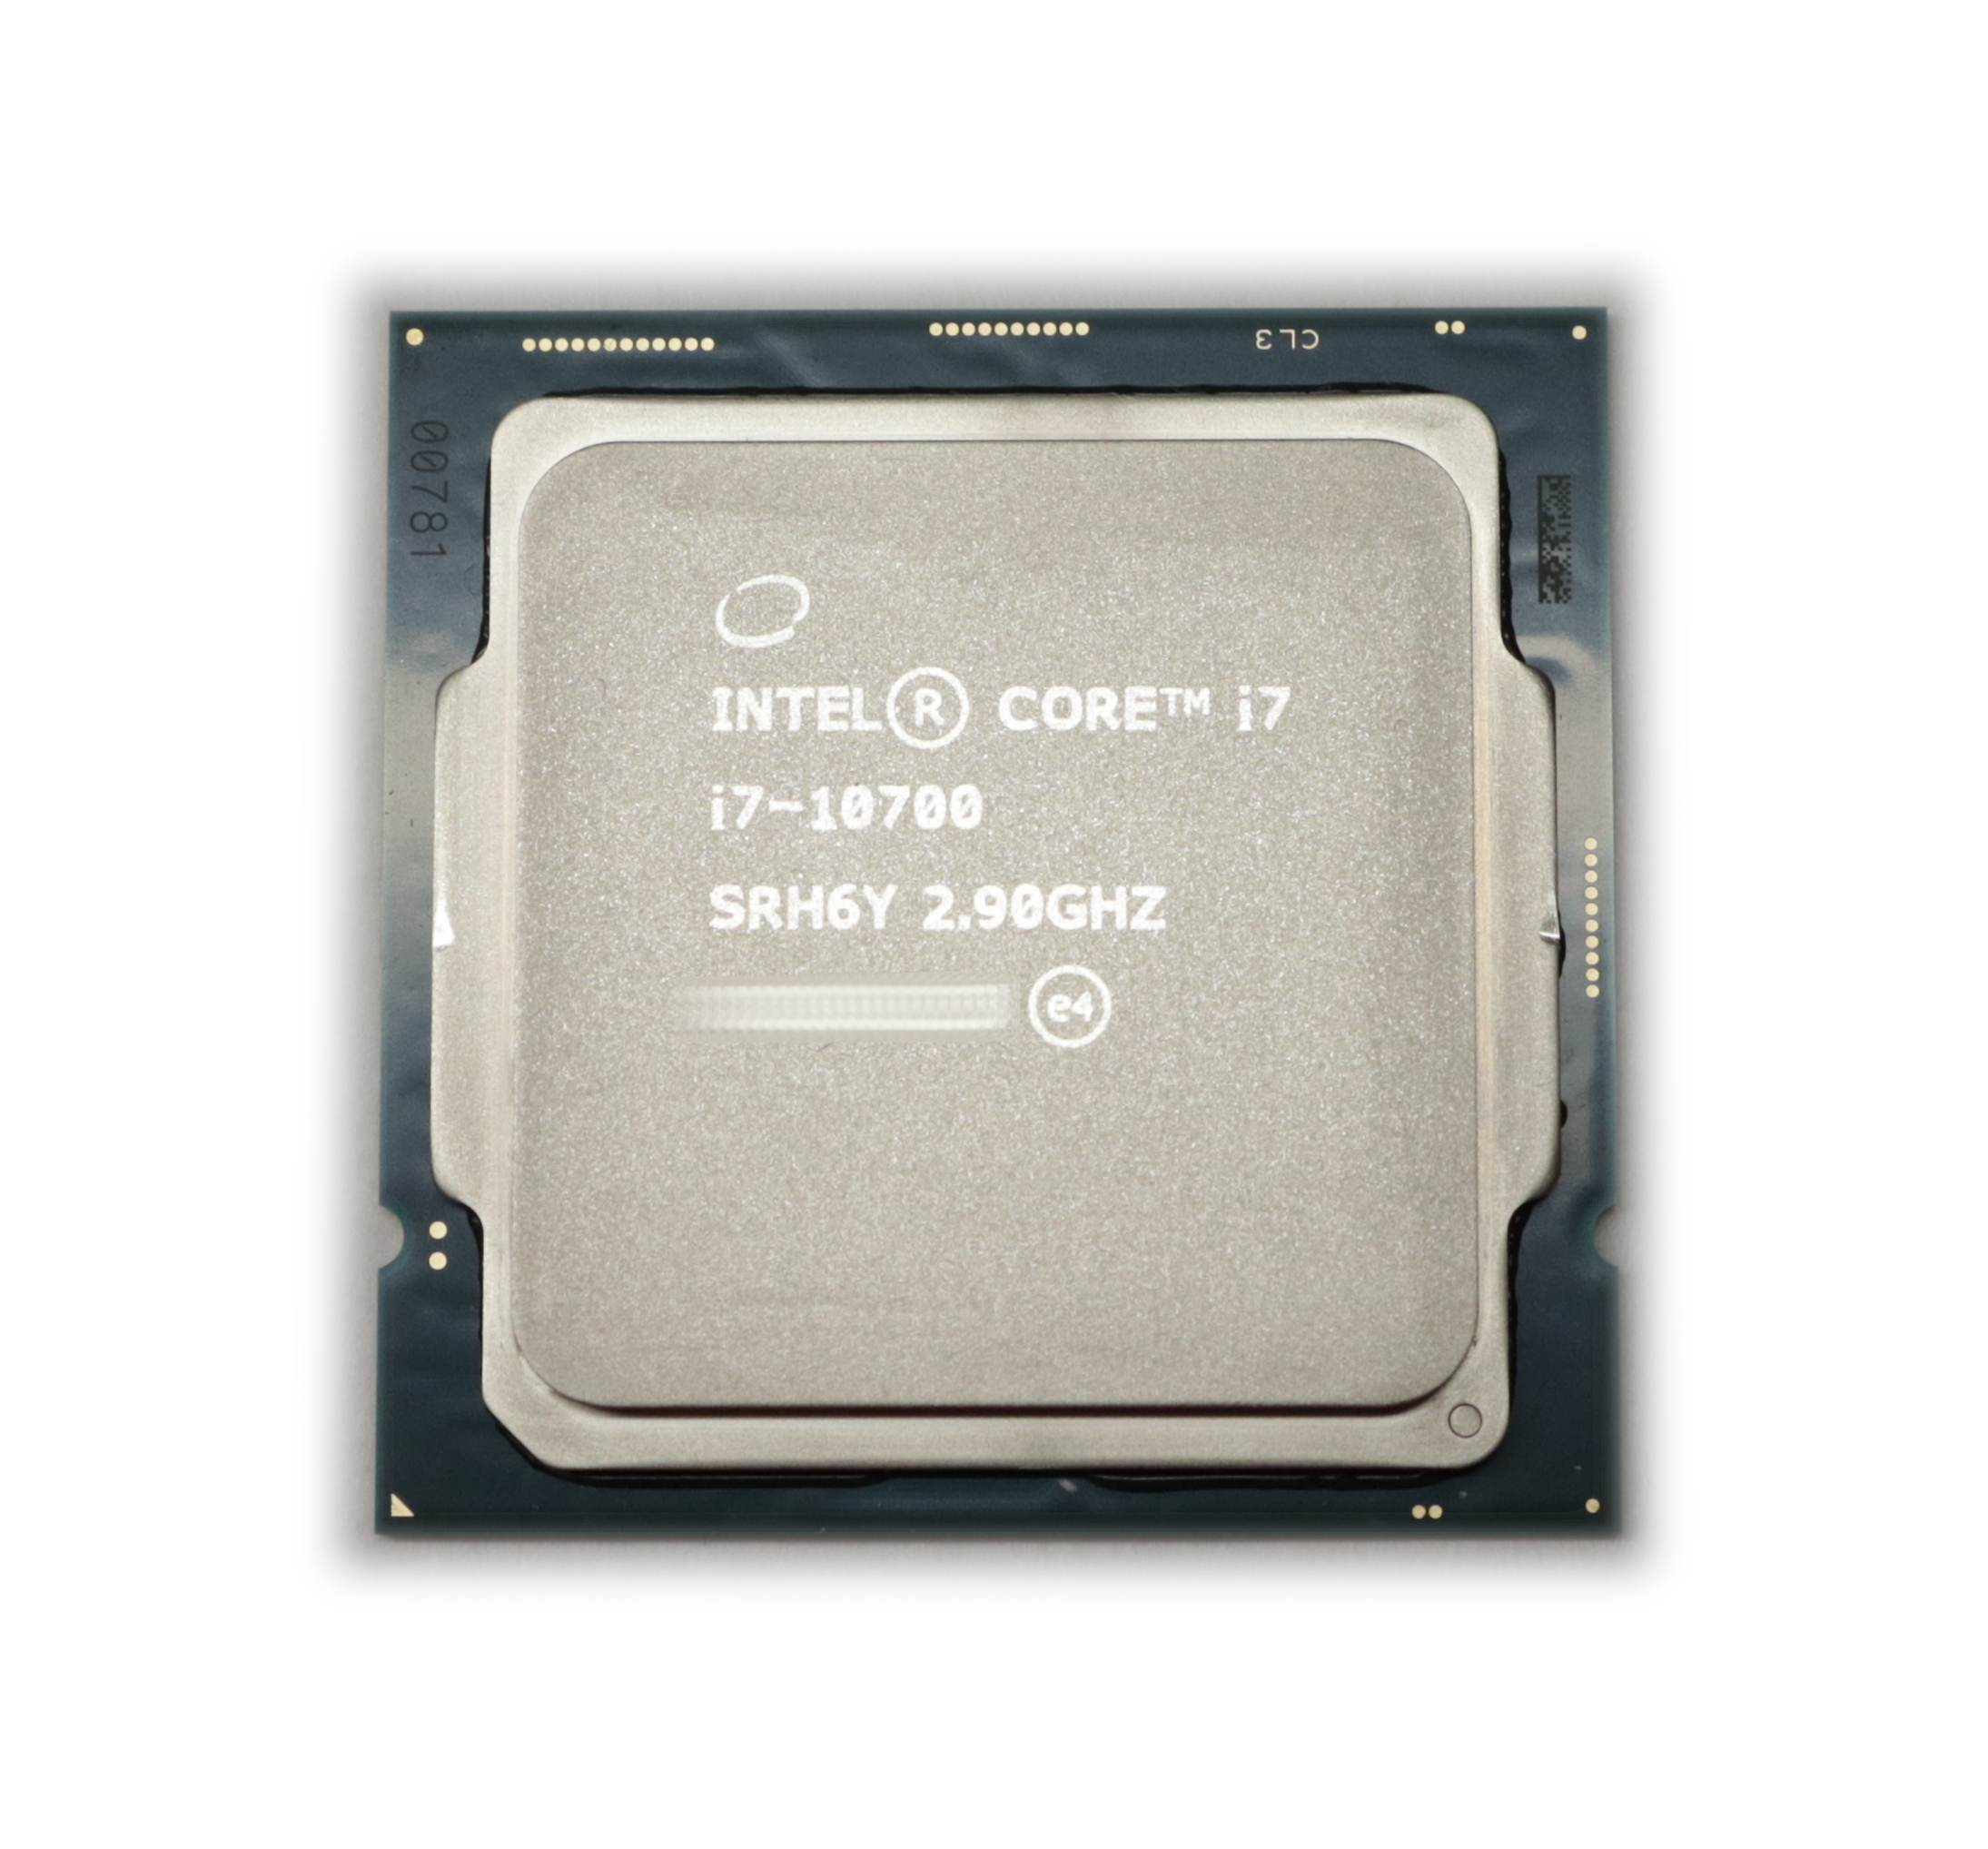 Intel Core i7-10700 2.9GHz 16M Cache 8C 16T Sockets FCLGA1200 SRH6Y